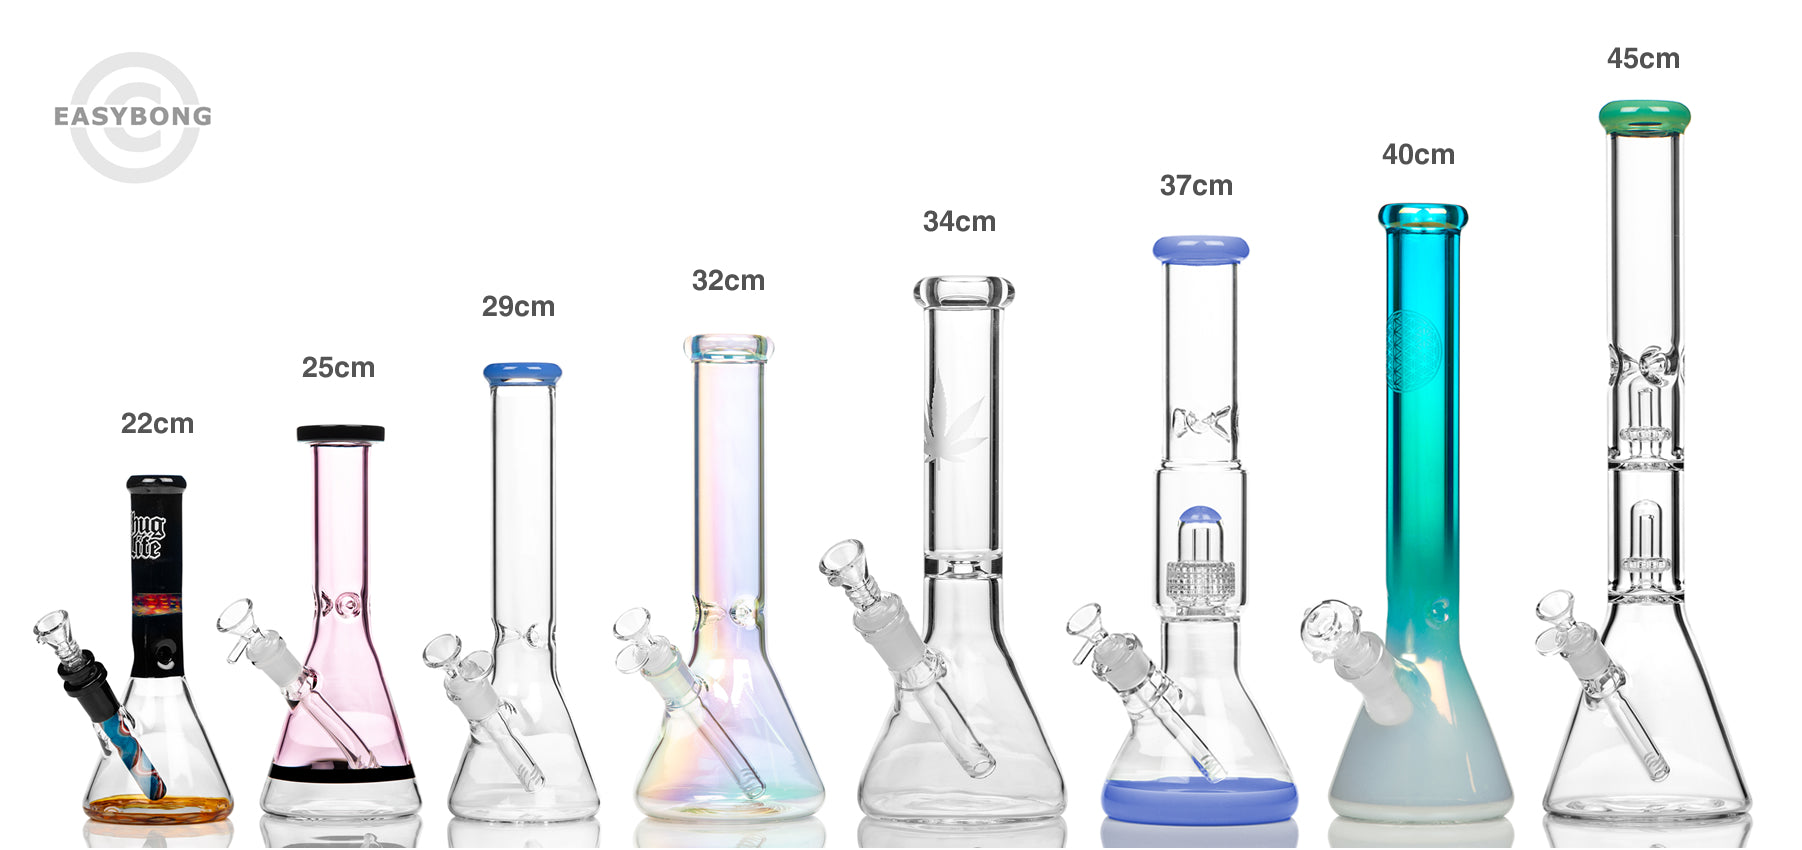 Glass beaker bongs side by side for a size comparison.